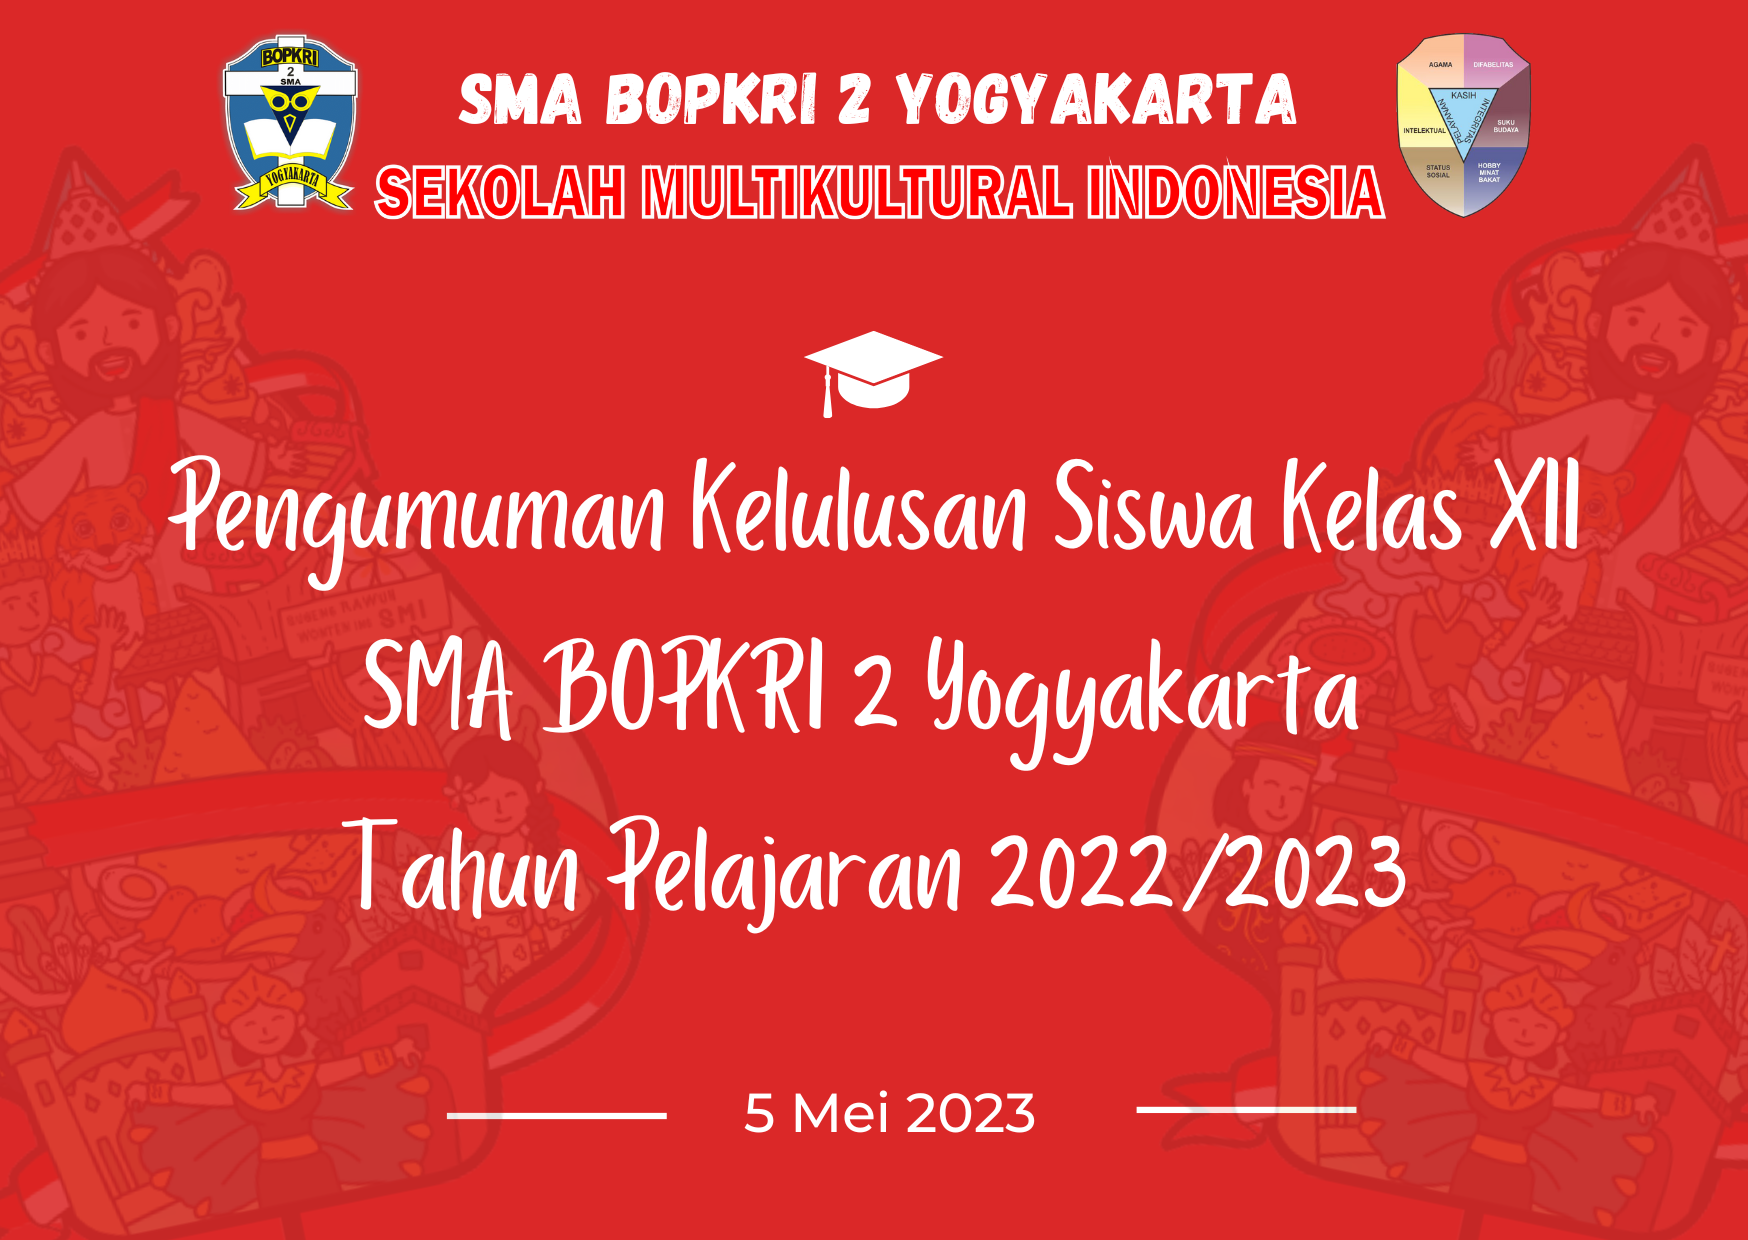 PENGUMUMAN KELULUSAN SISWA KELAS XII SMA BOPKRI 2 YOGYAKARTA TAHUN PELAJARAN 2022/2023